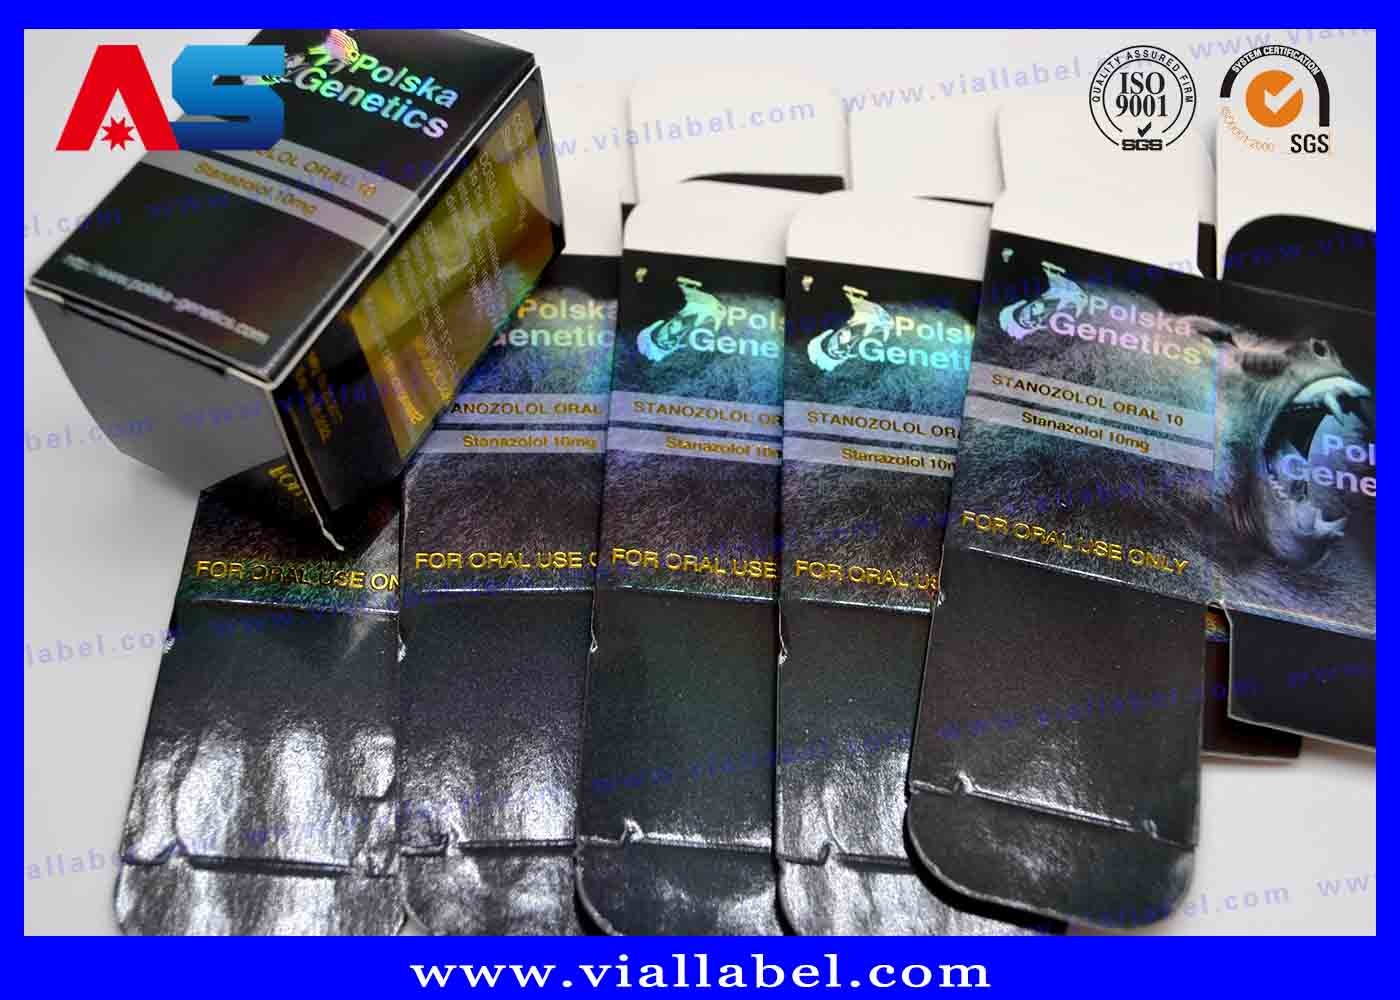  Laser Printing Pharmaceutical Custom Box Packaging For 10ml Bottles Manufactures